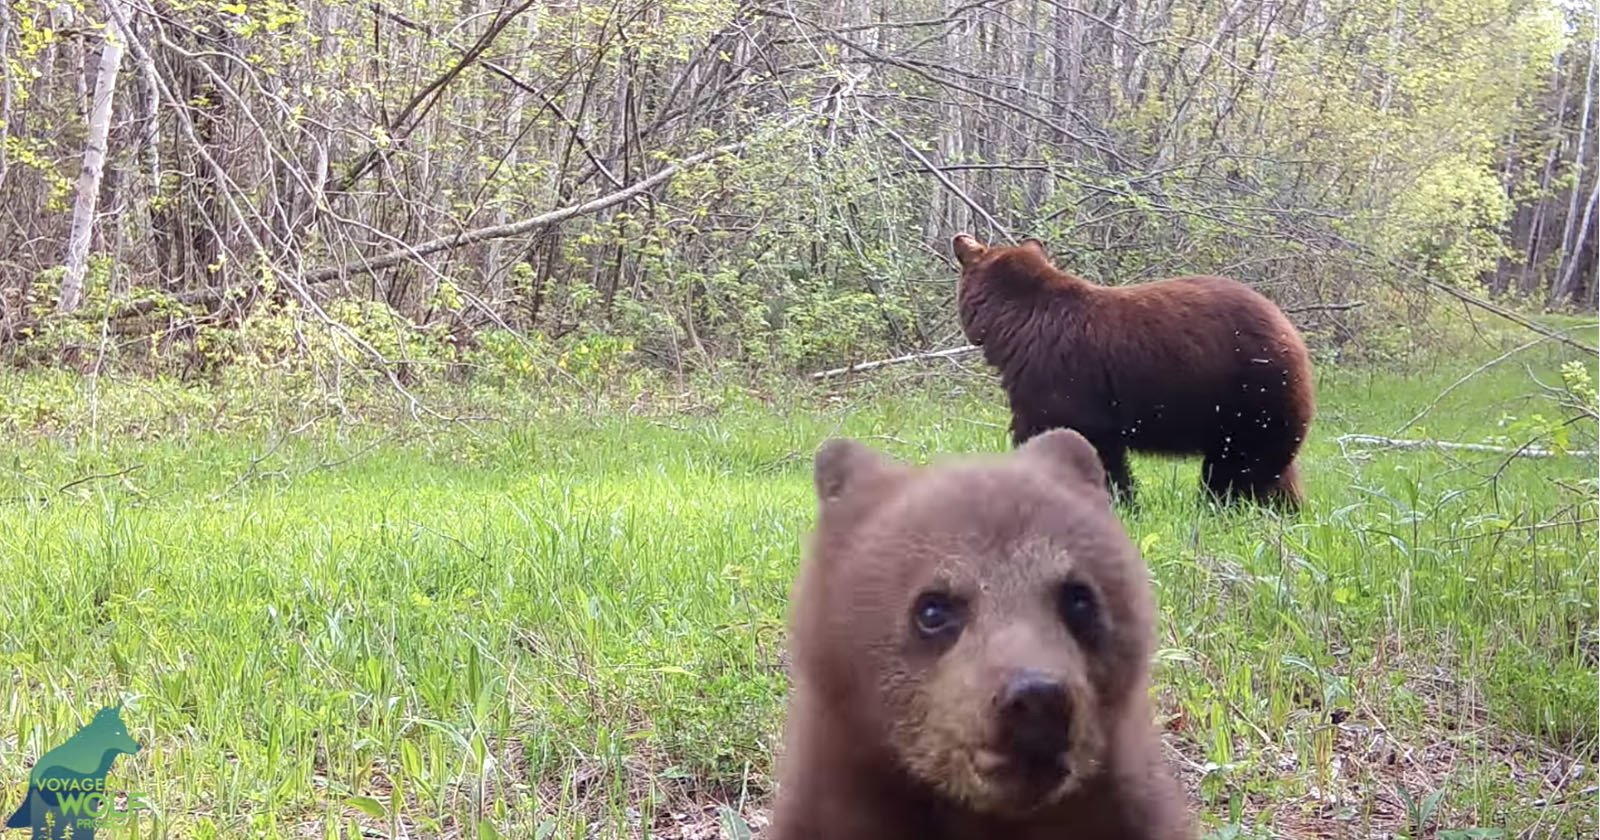  bear cub being twerp attacks trail camera 